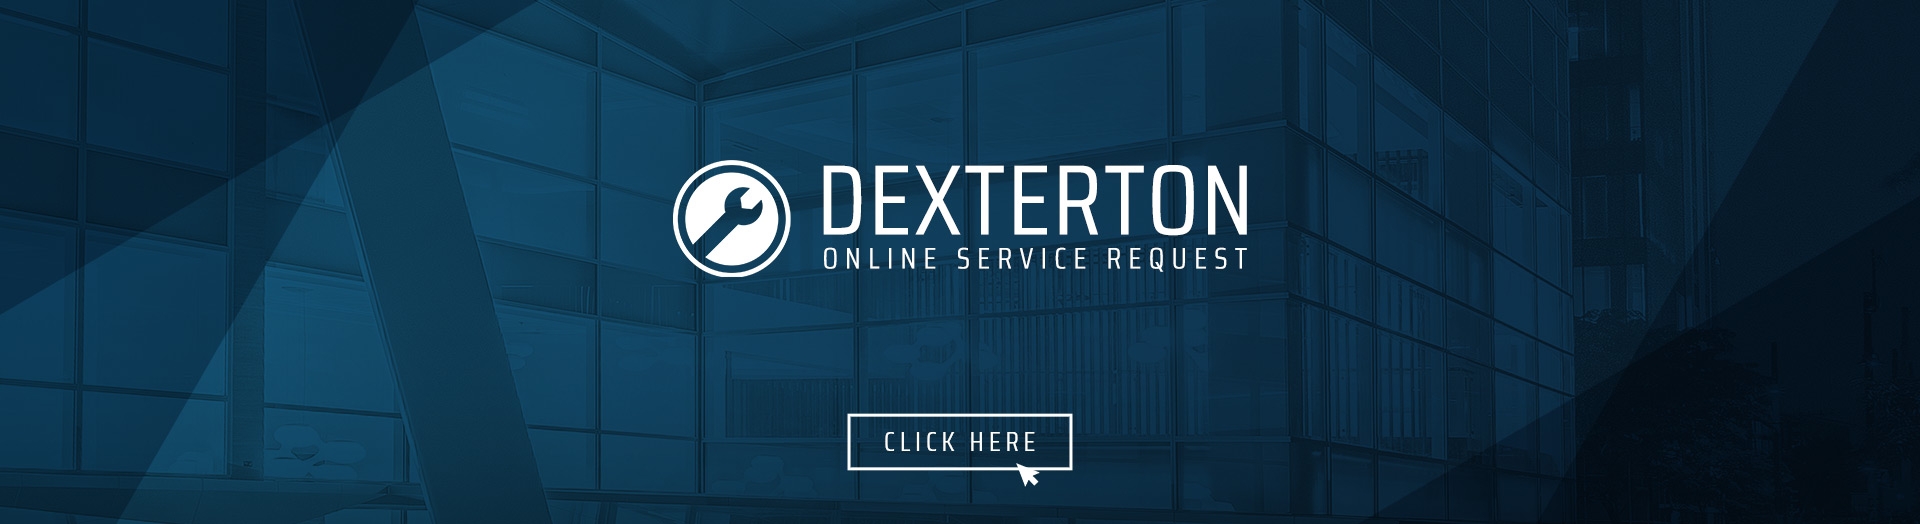 Dexterton Online Service Request